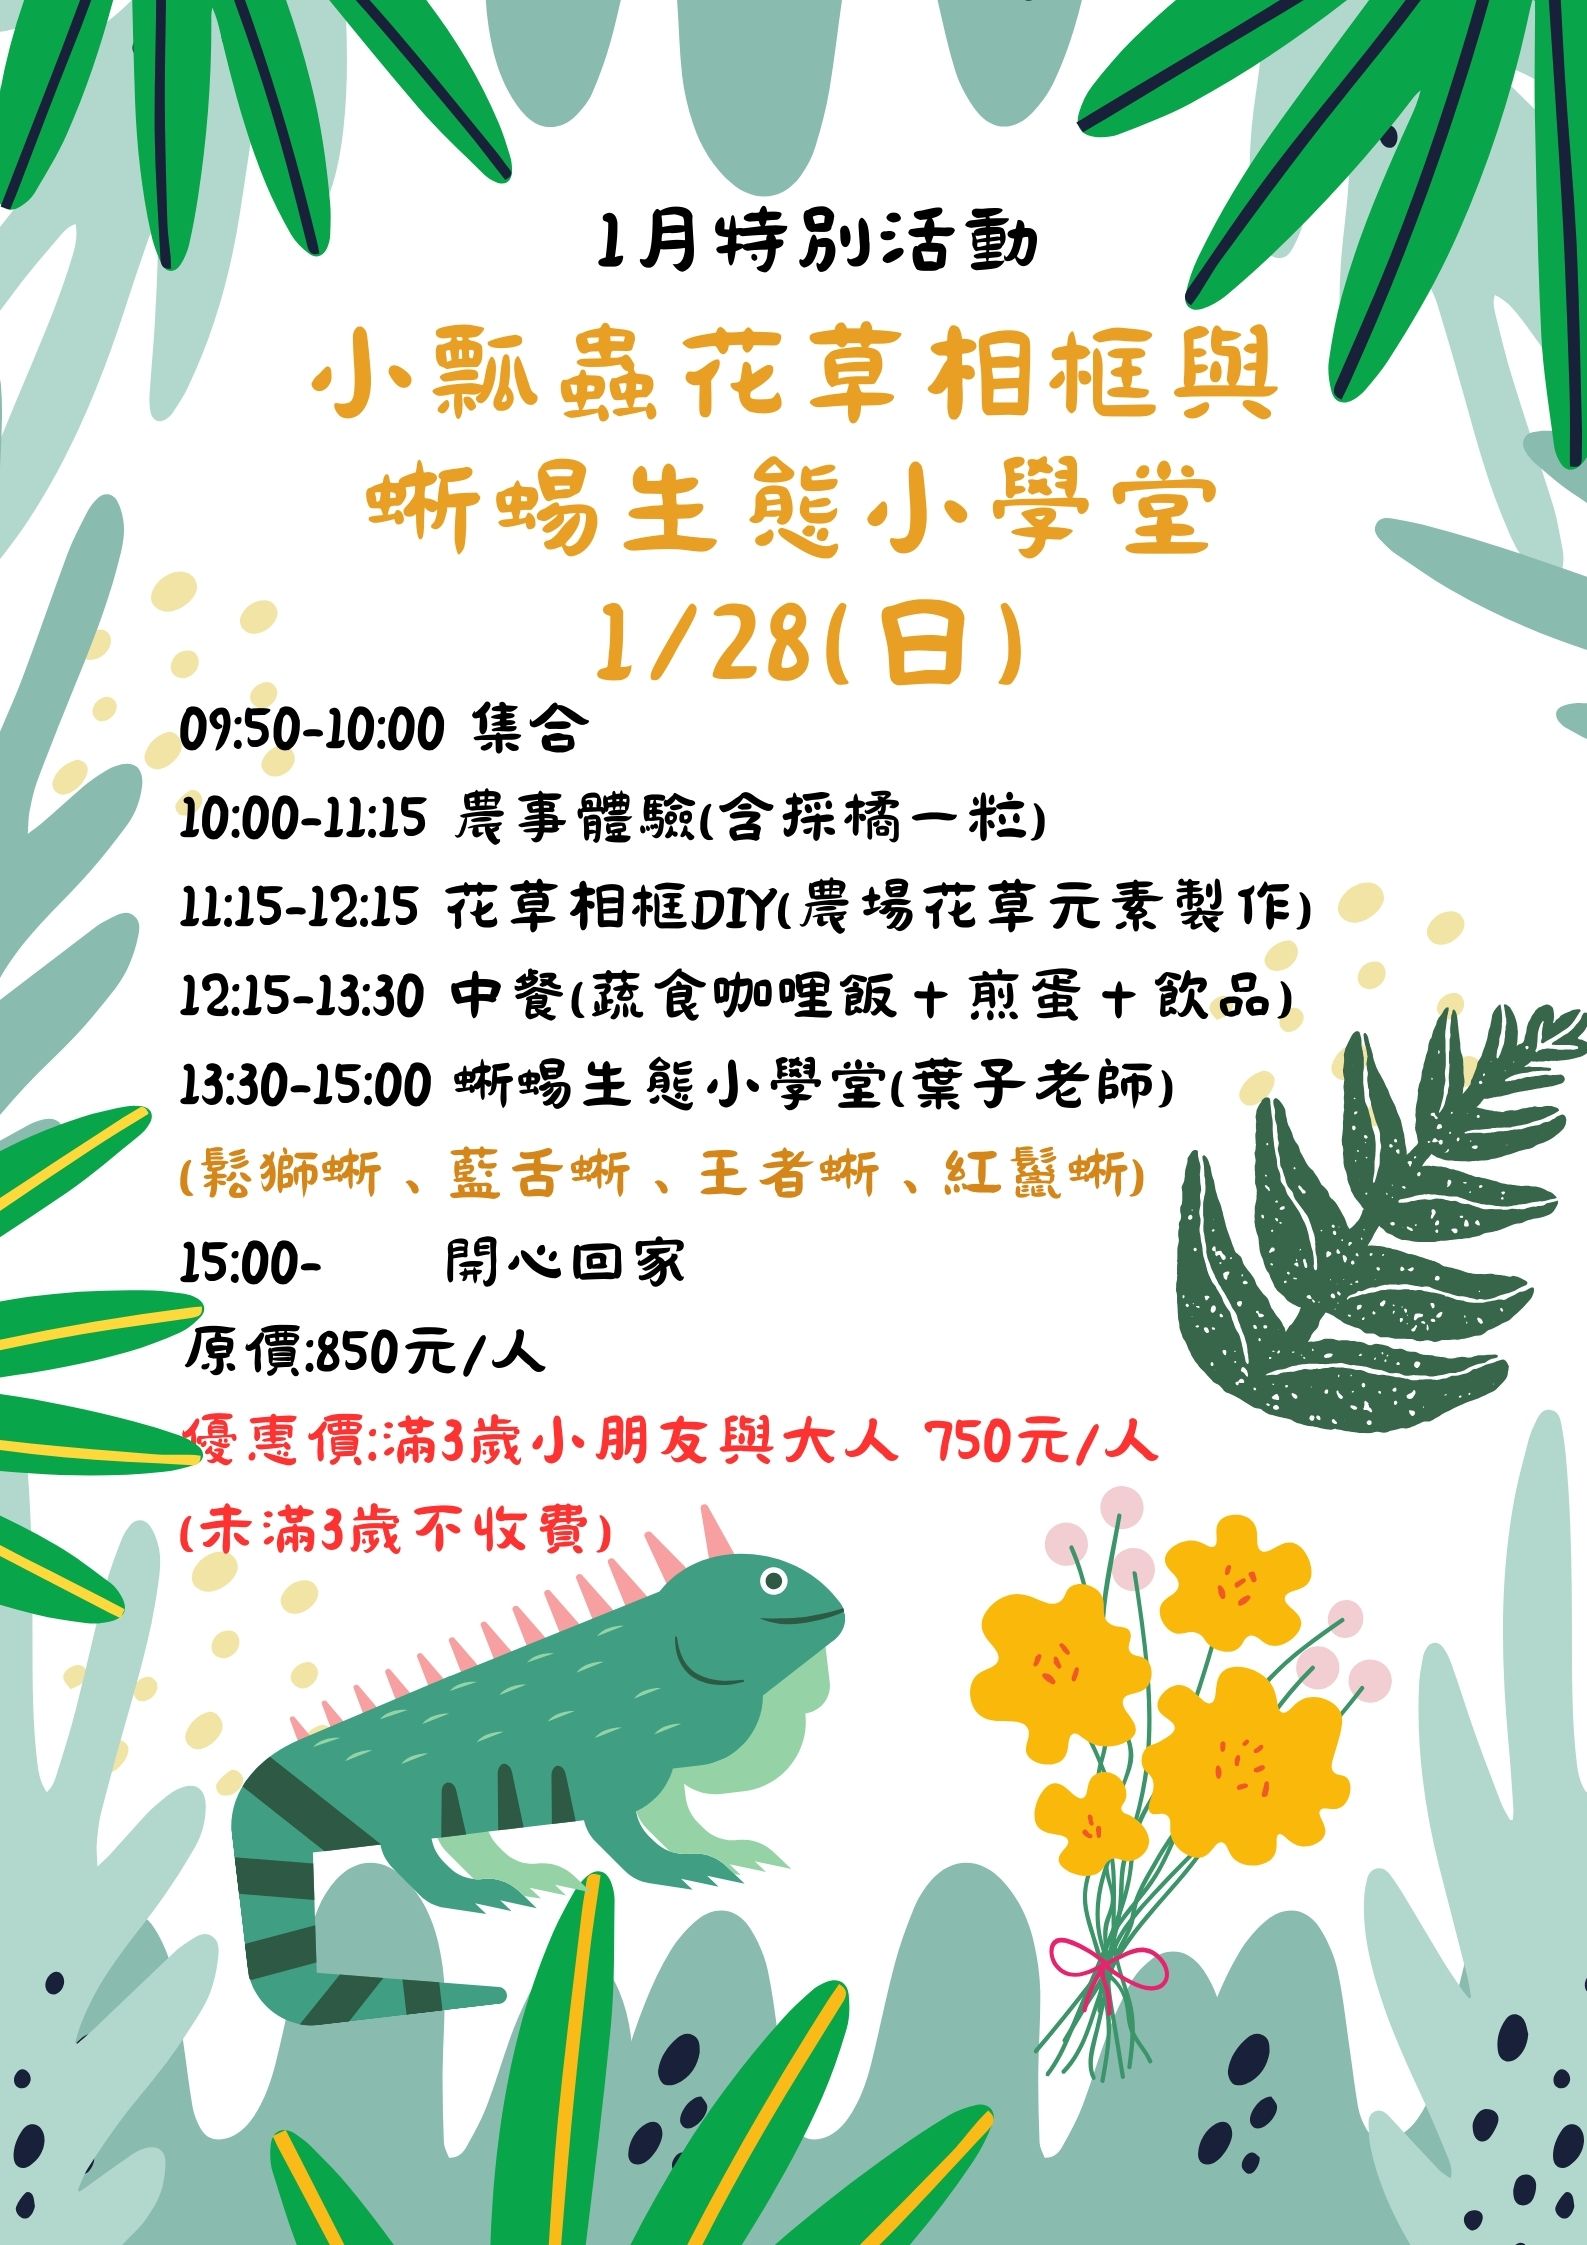 Dinosaur Party Invitation